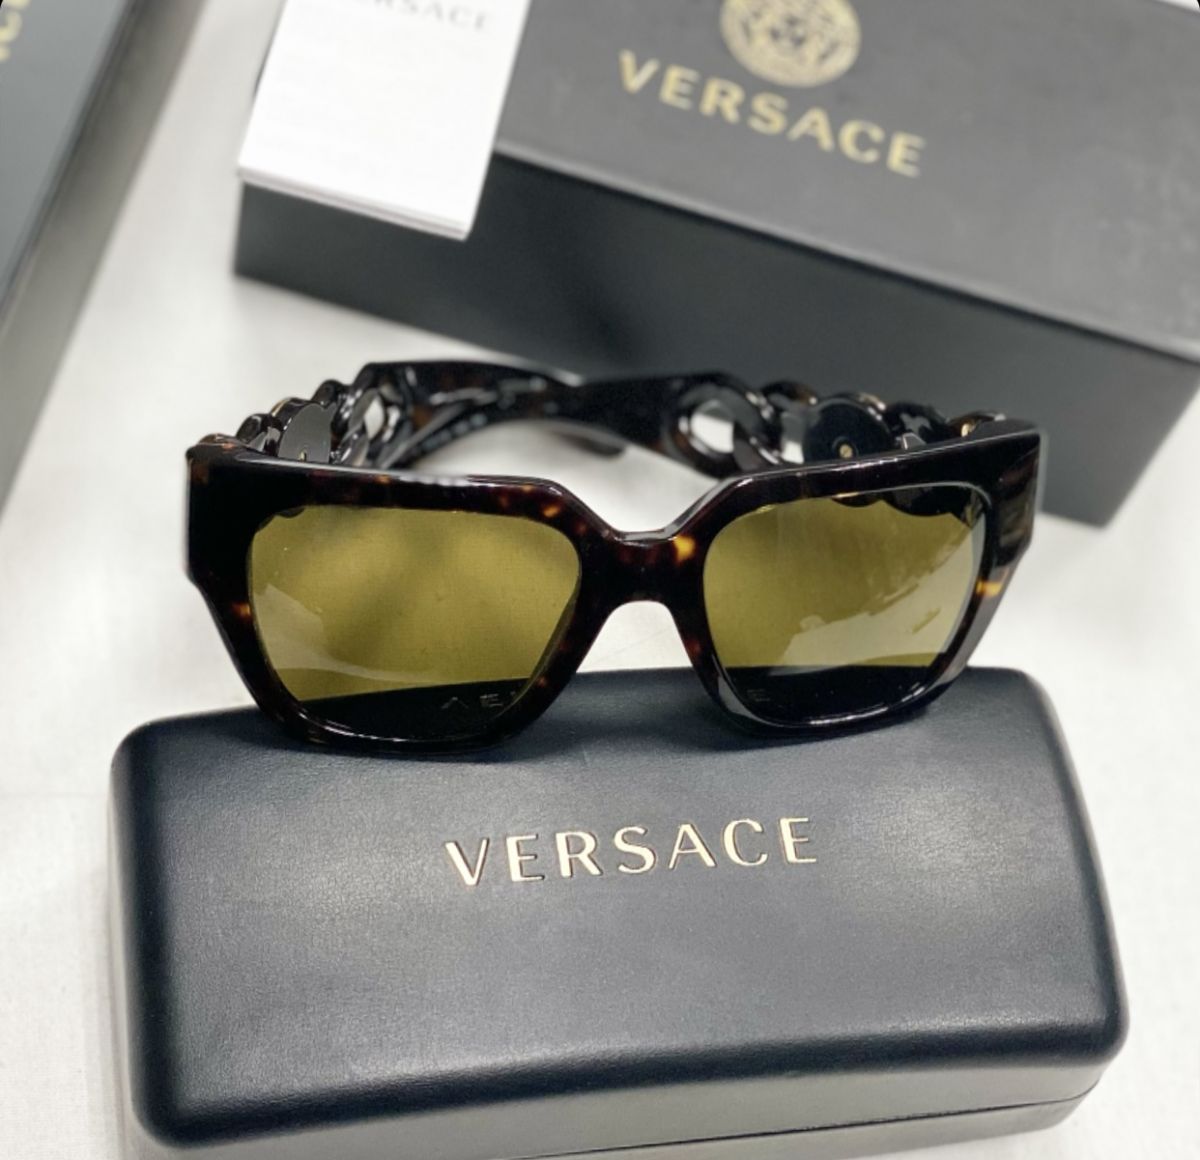 Очки Versace цена 15 385 руб / упаковка / документы / 